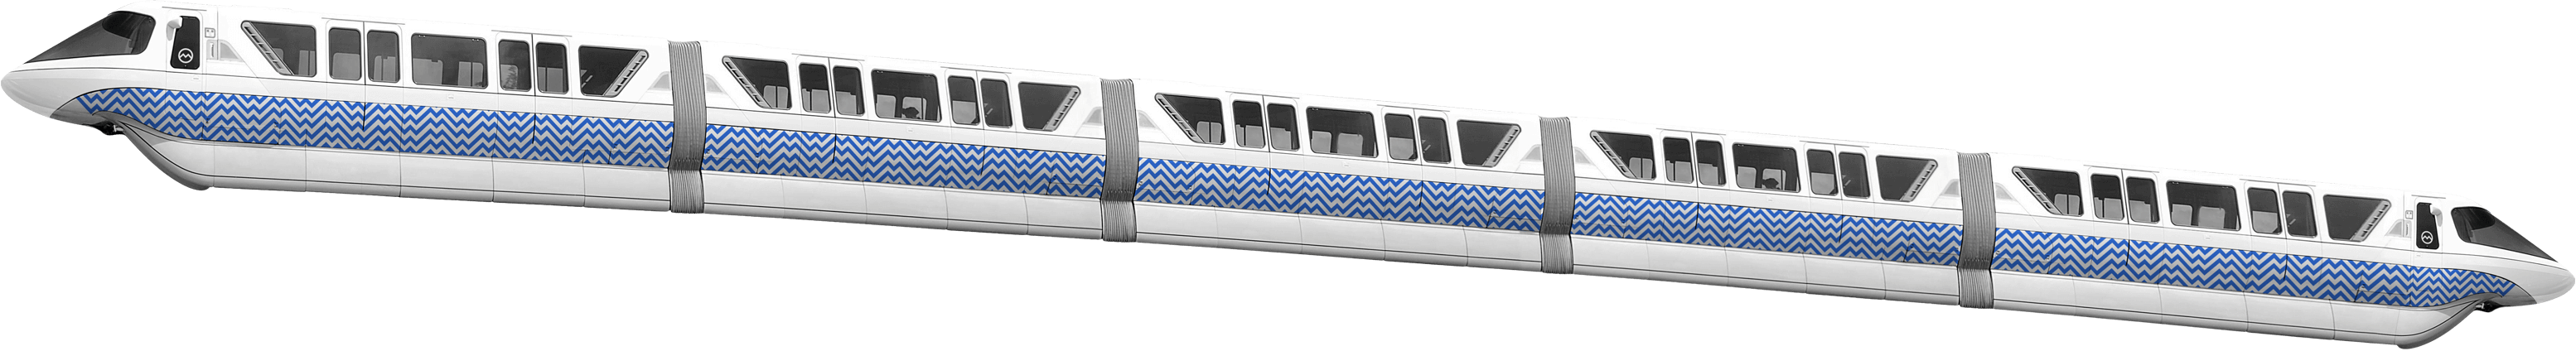 subway cars in Odesa